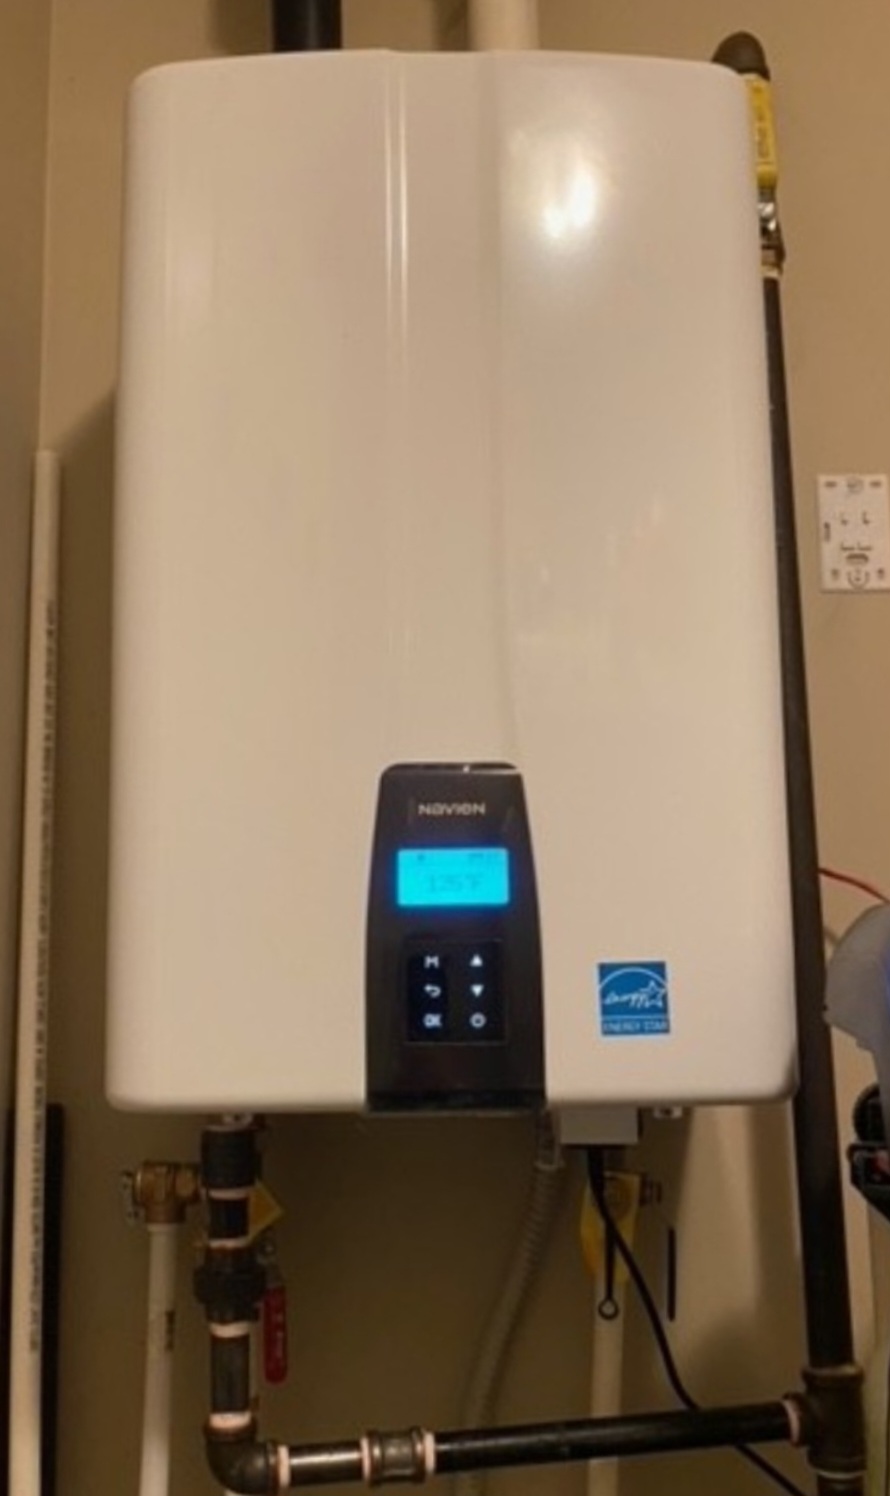 Standard Electric Water Heater